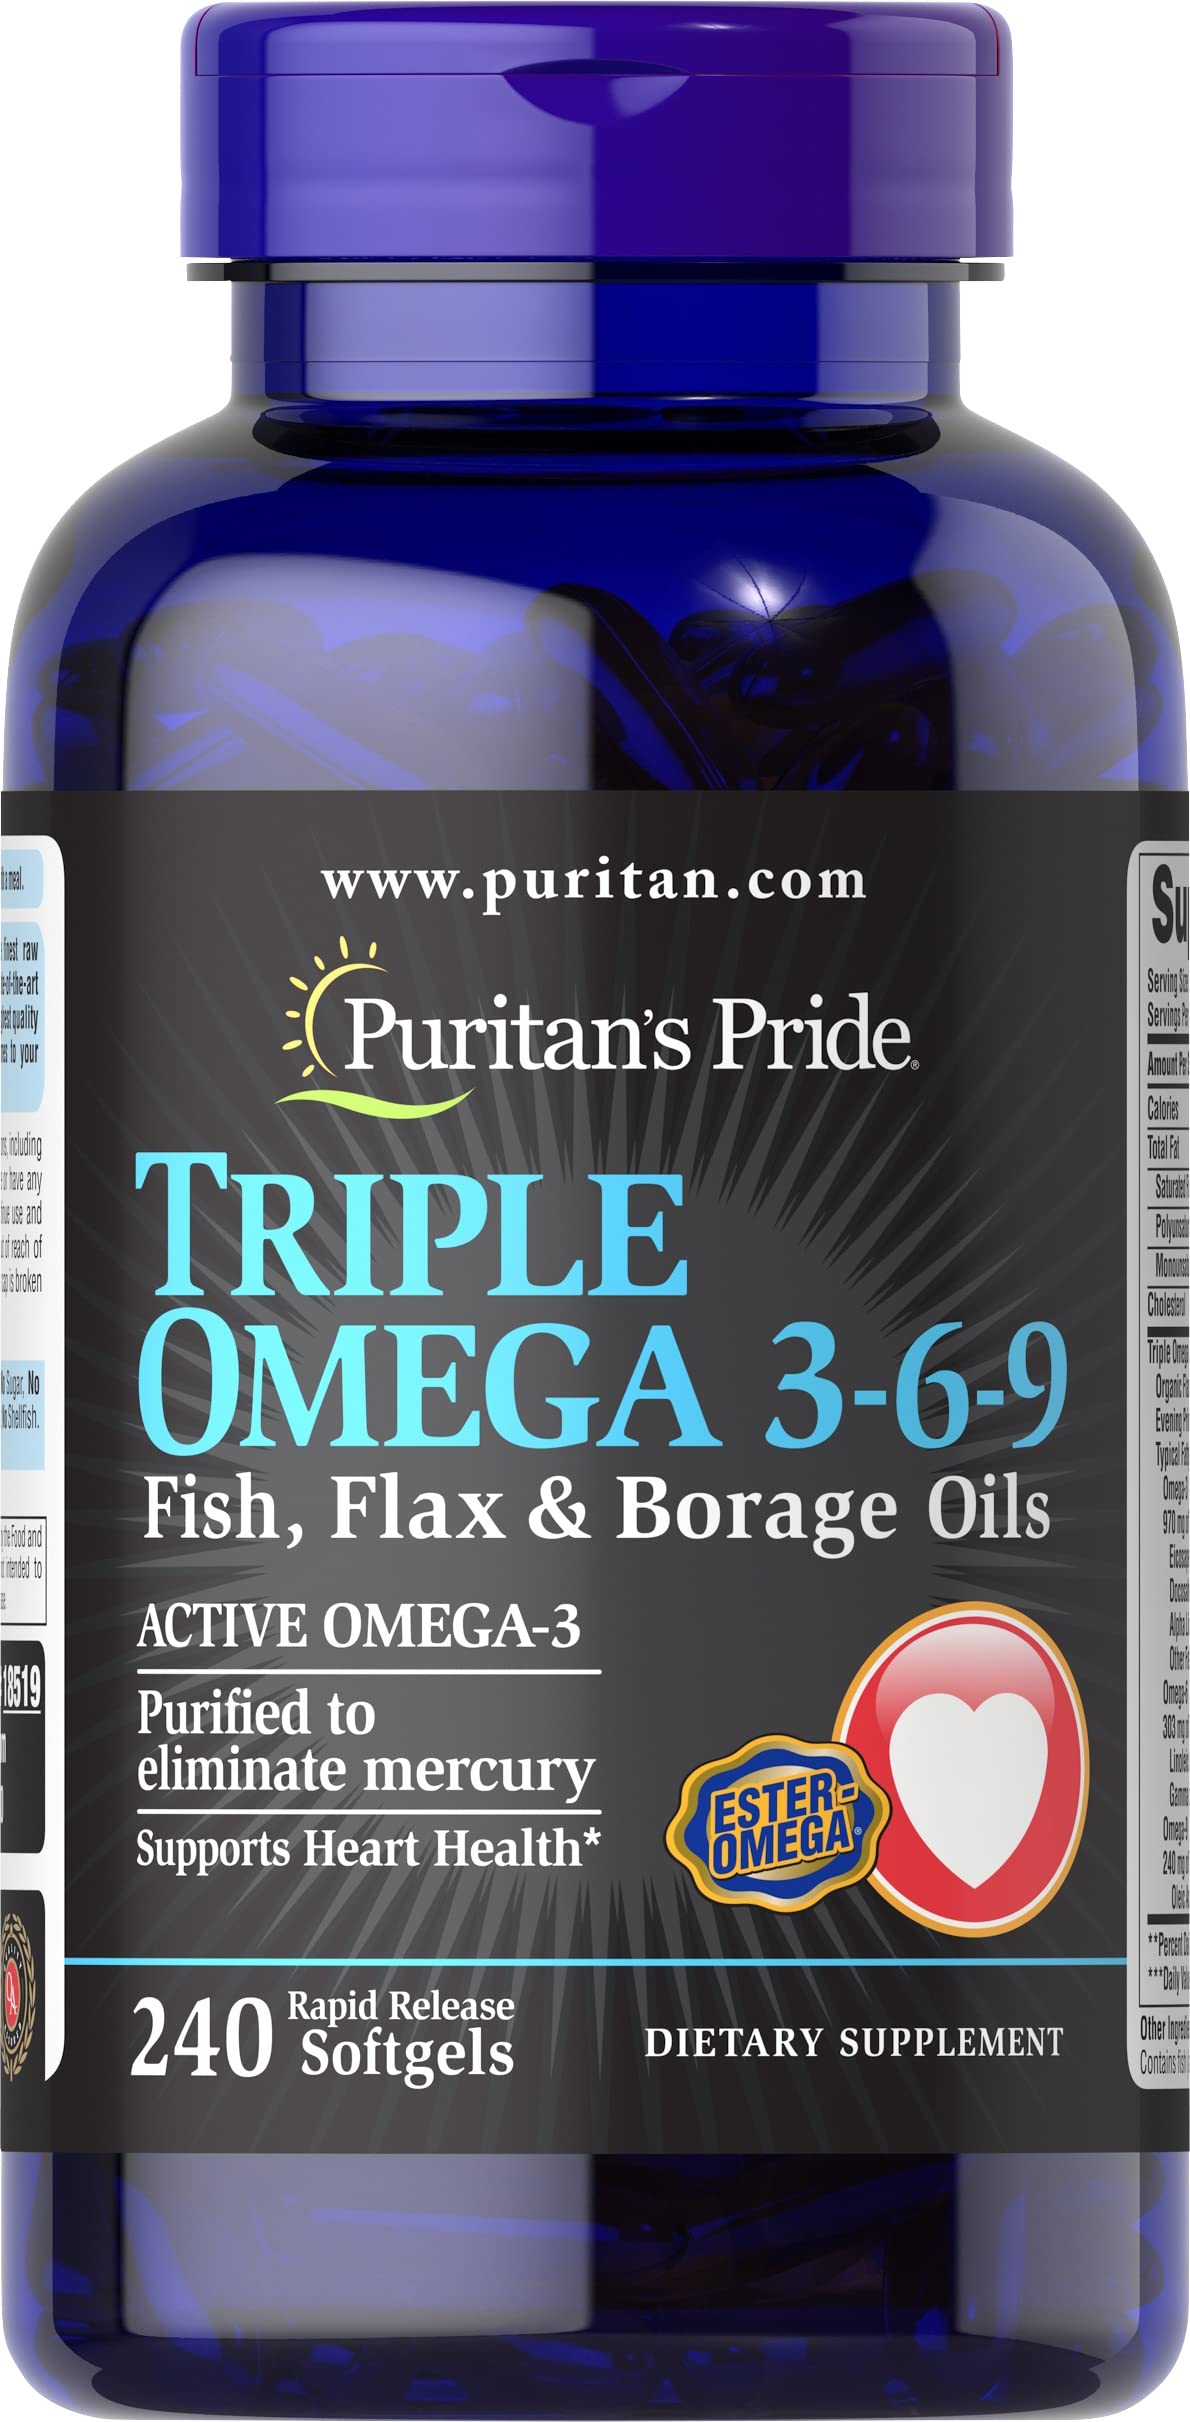 Puritan's Pride Triple Omega 3-6-9 Fish, Flax & Borage Oils, Supports Heart Health and Healthy Joints, 240 c0 Sub & Savet $8.62